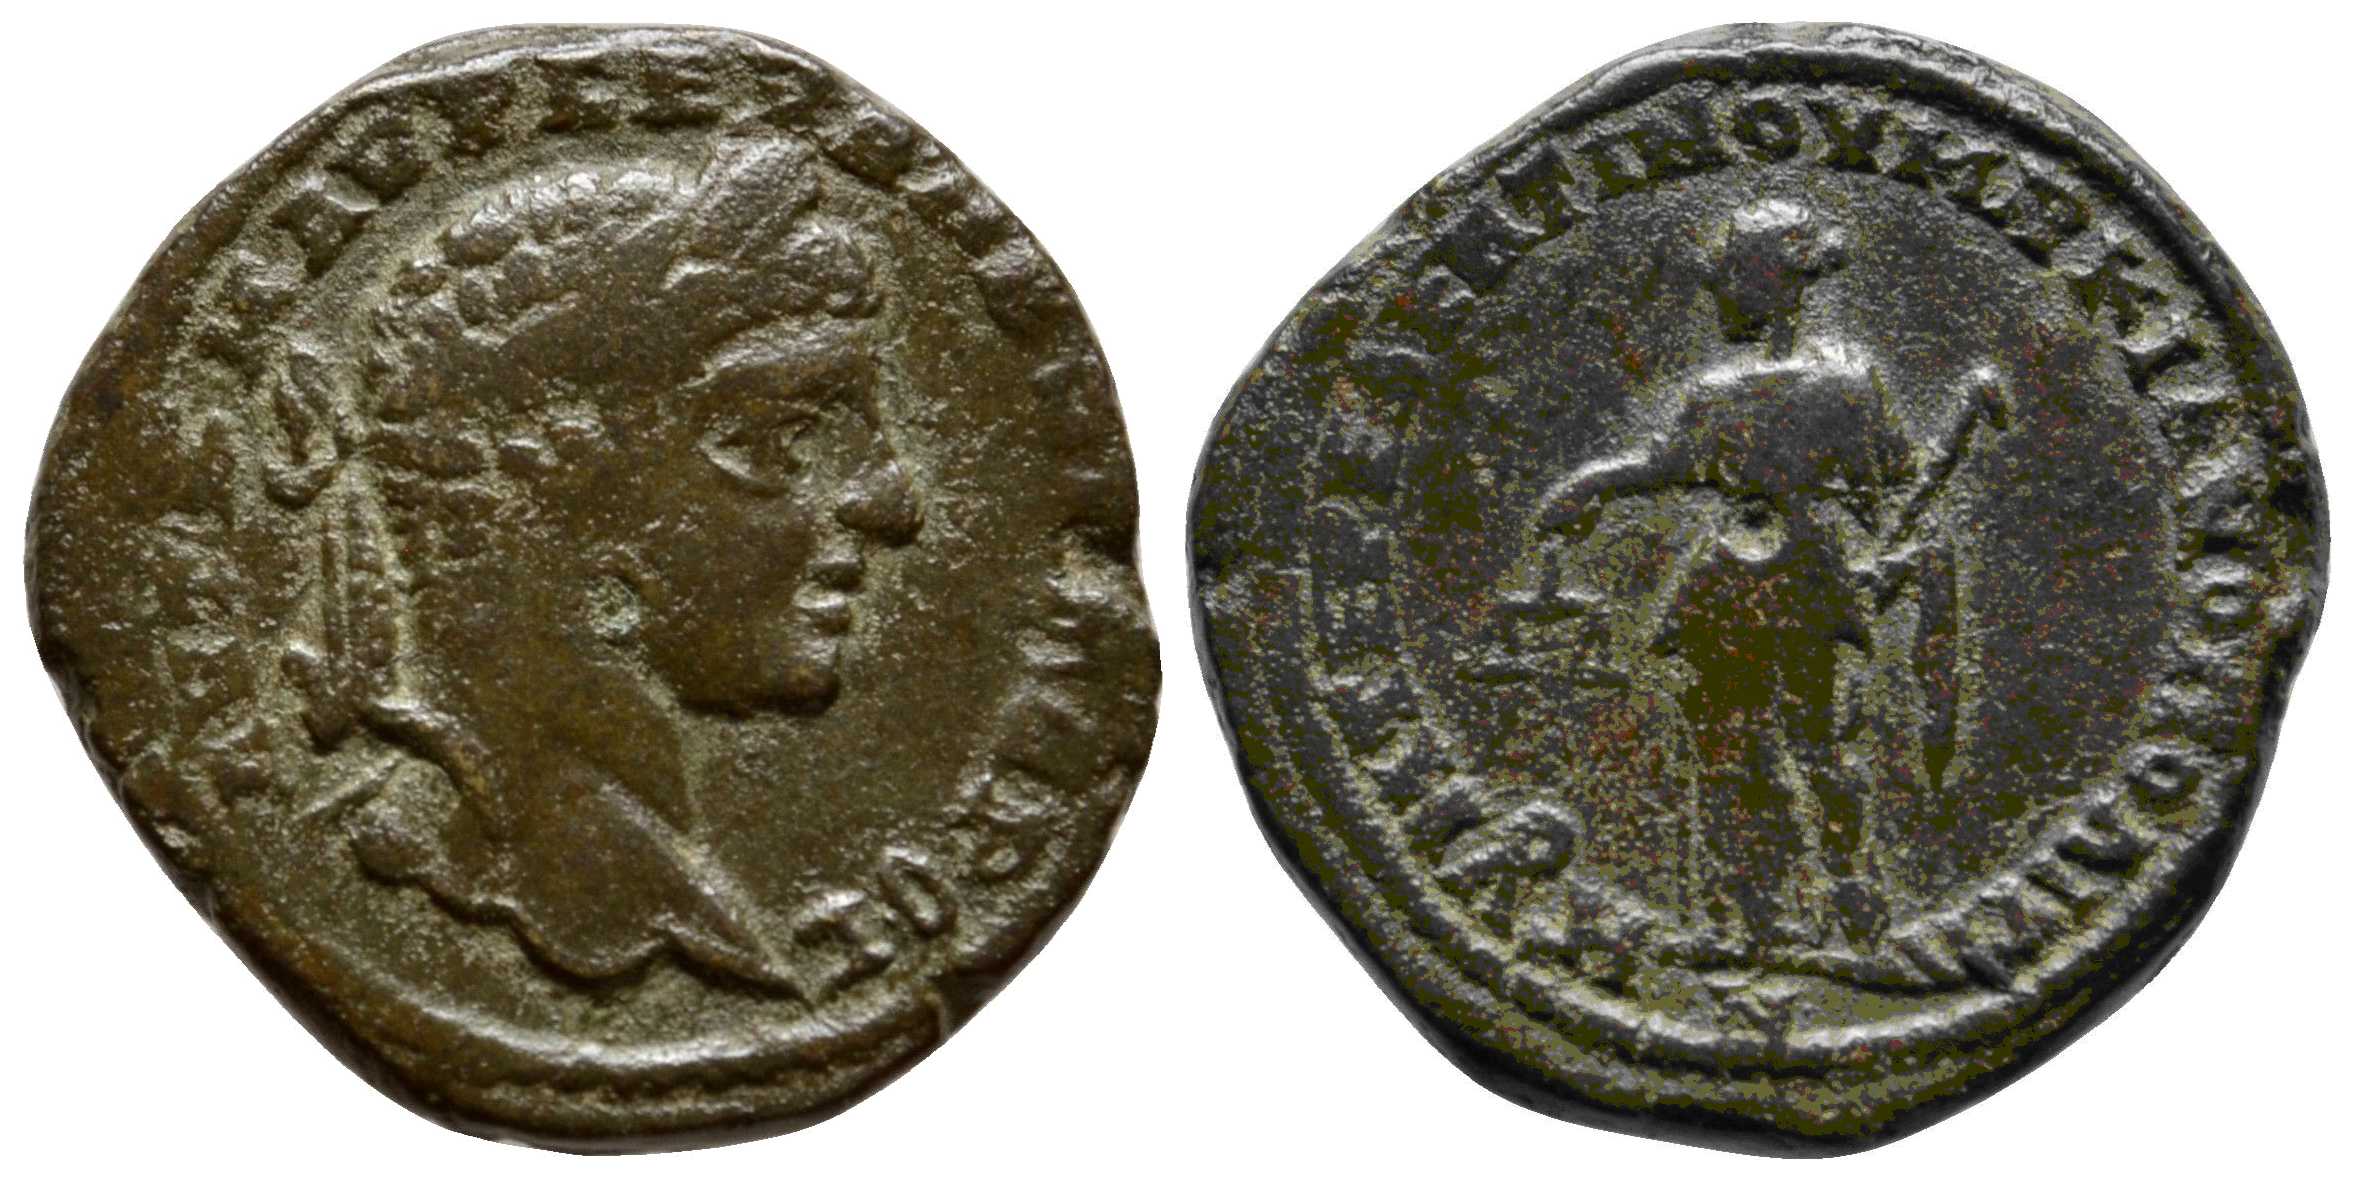 6182 Marcianopolis Moesia Inferior Severus Alexander AE